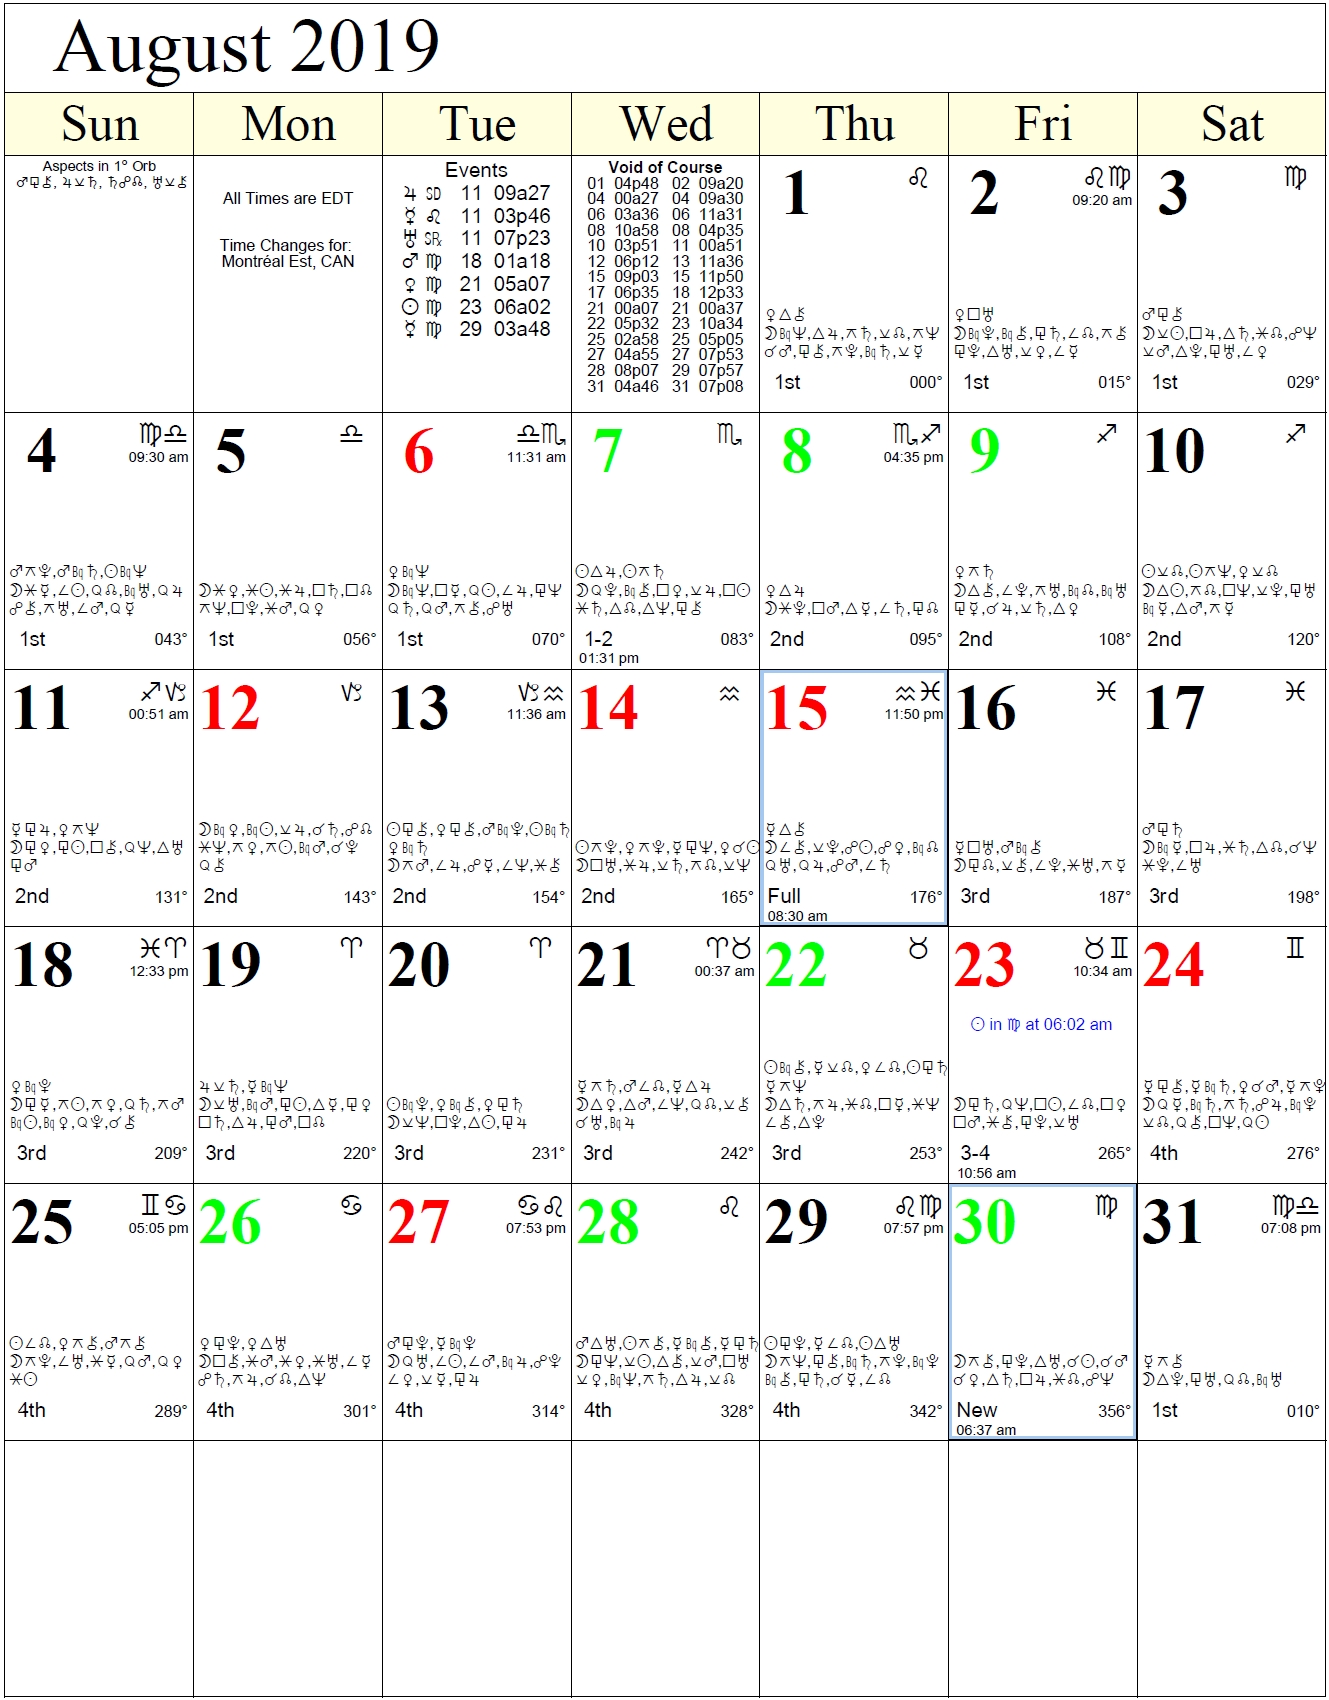 lunar astrology calendar april 2023